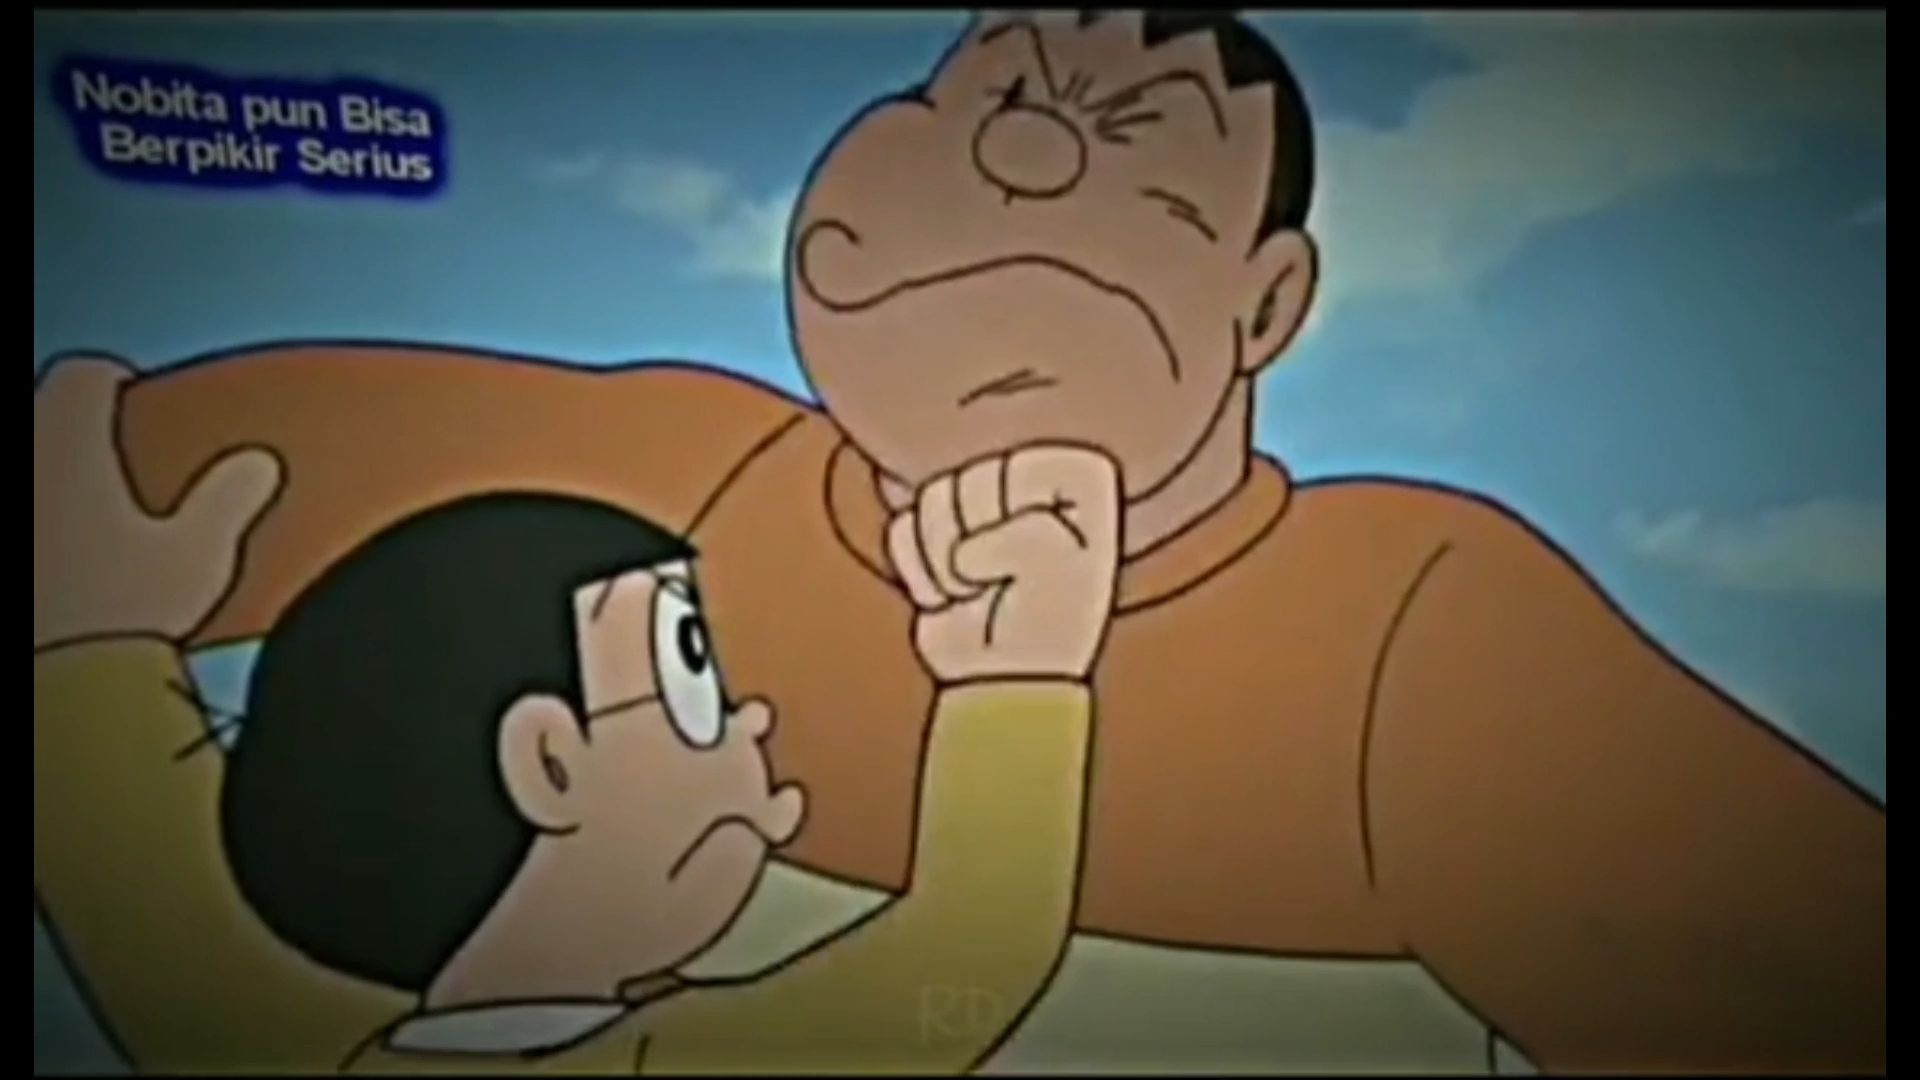 Nobita vs giant 🥶 - Doraemon best battle - Bilibili